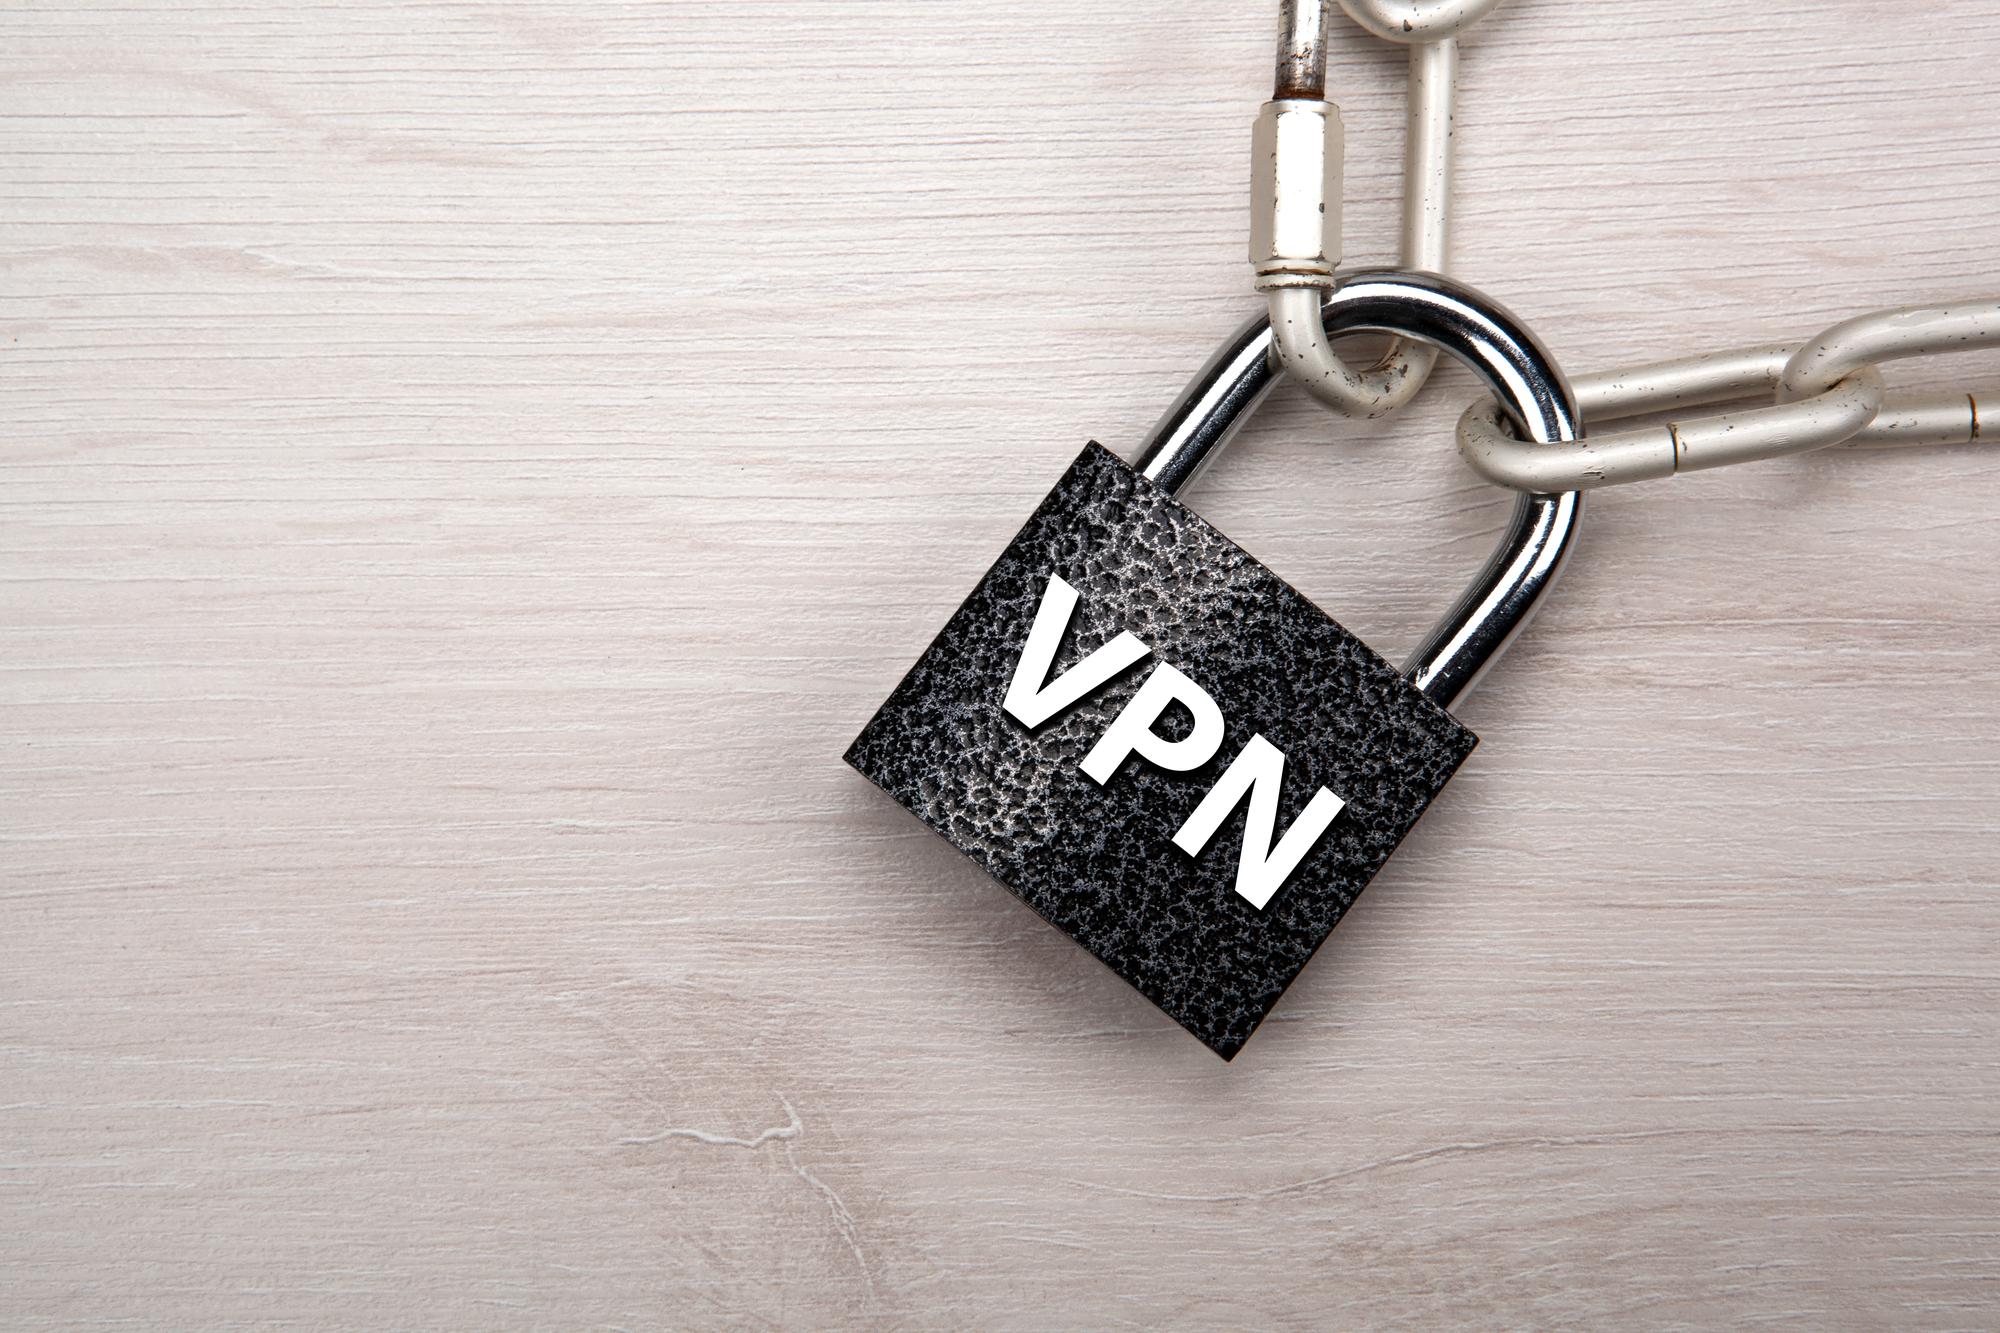 Roskomnadzor blockiert VPN-Dienste